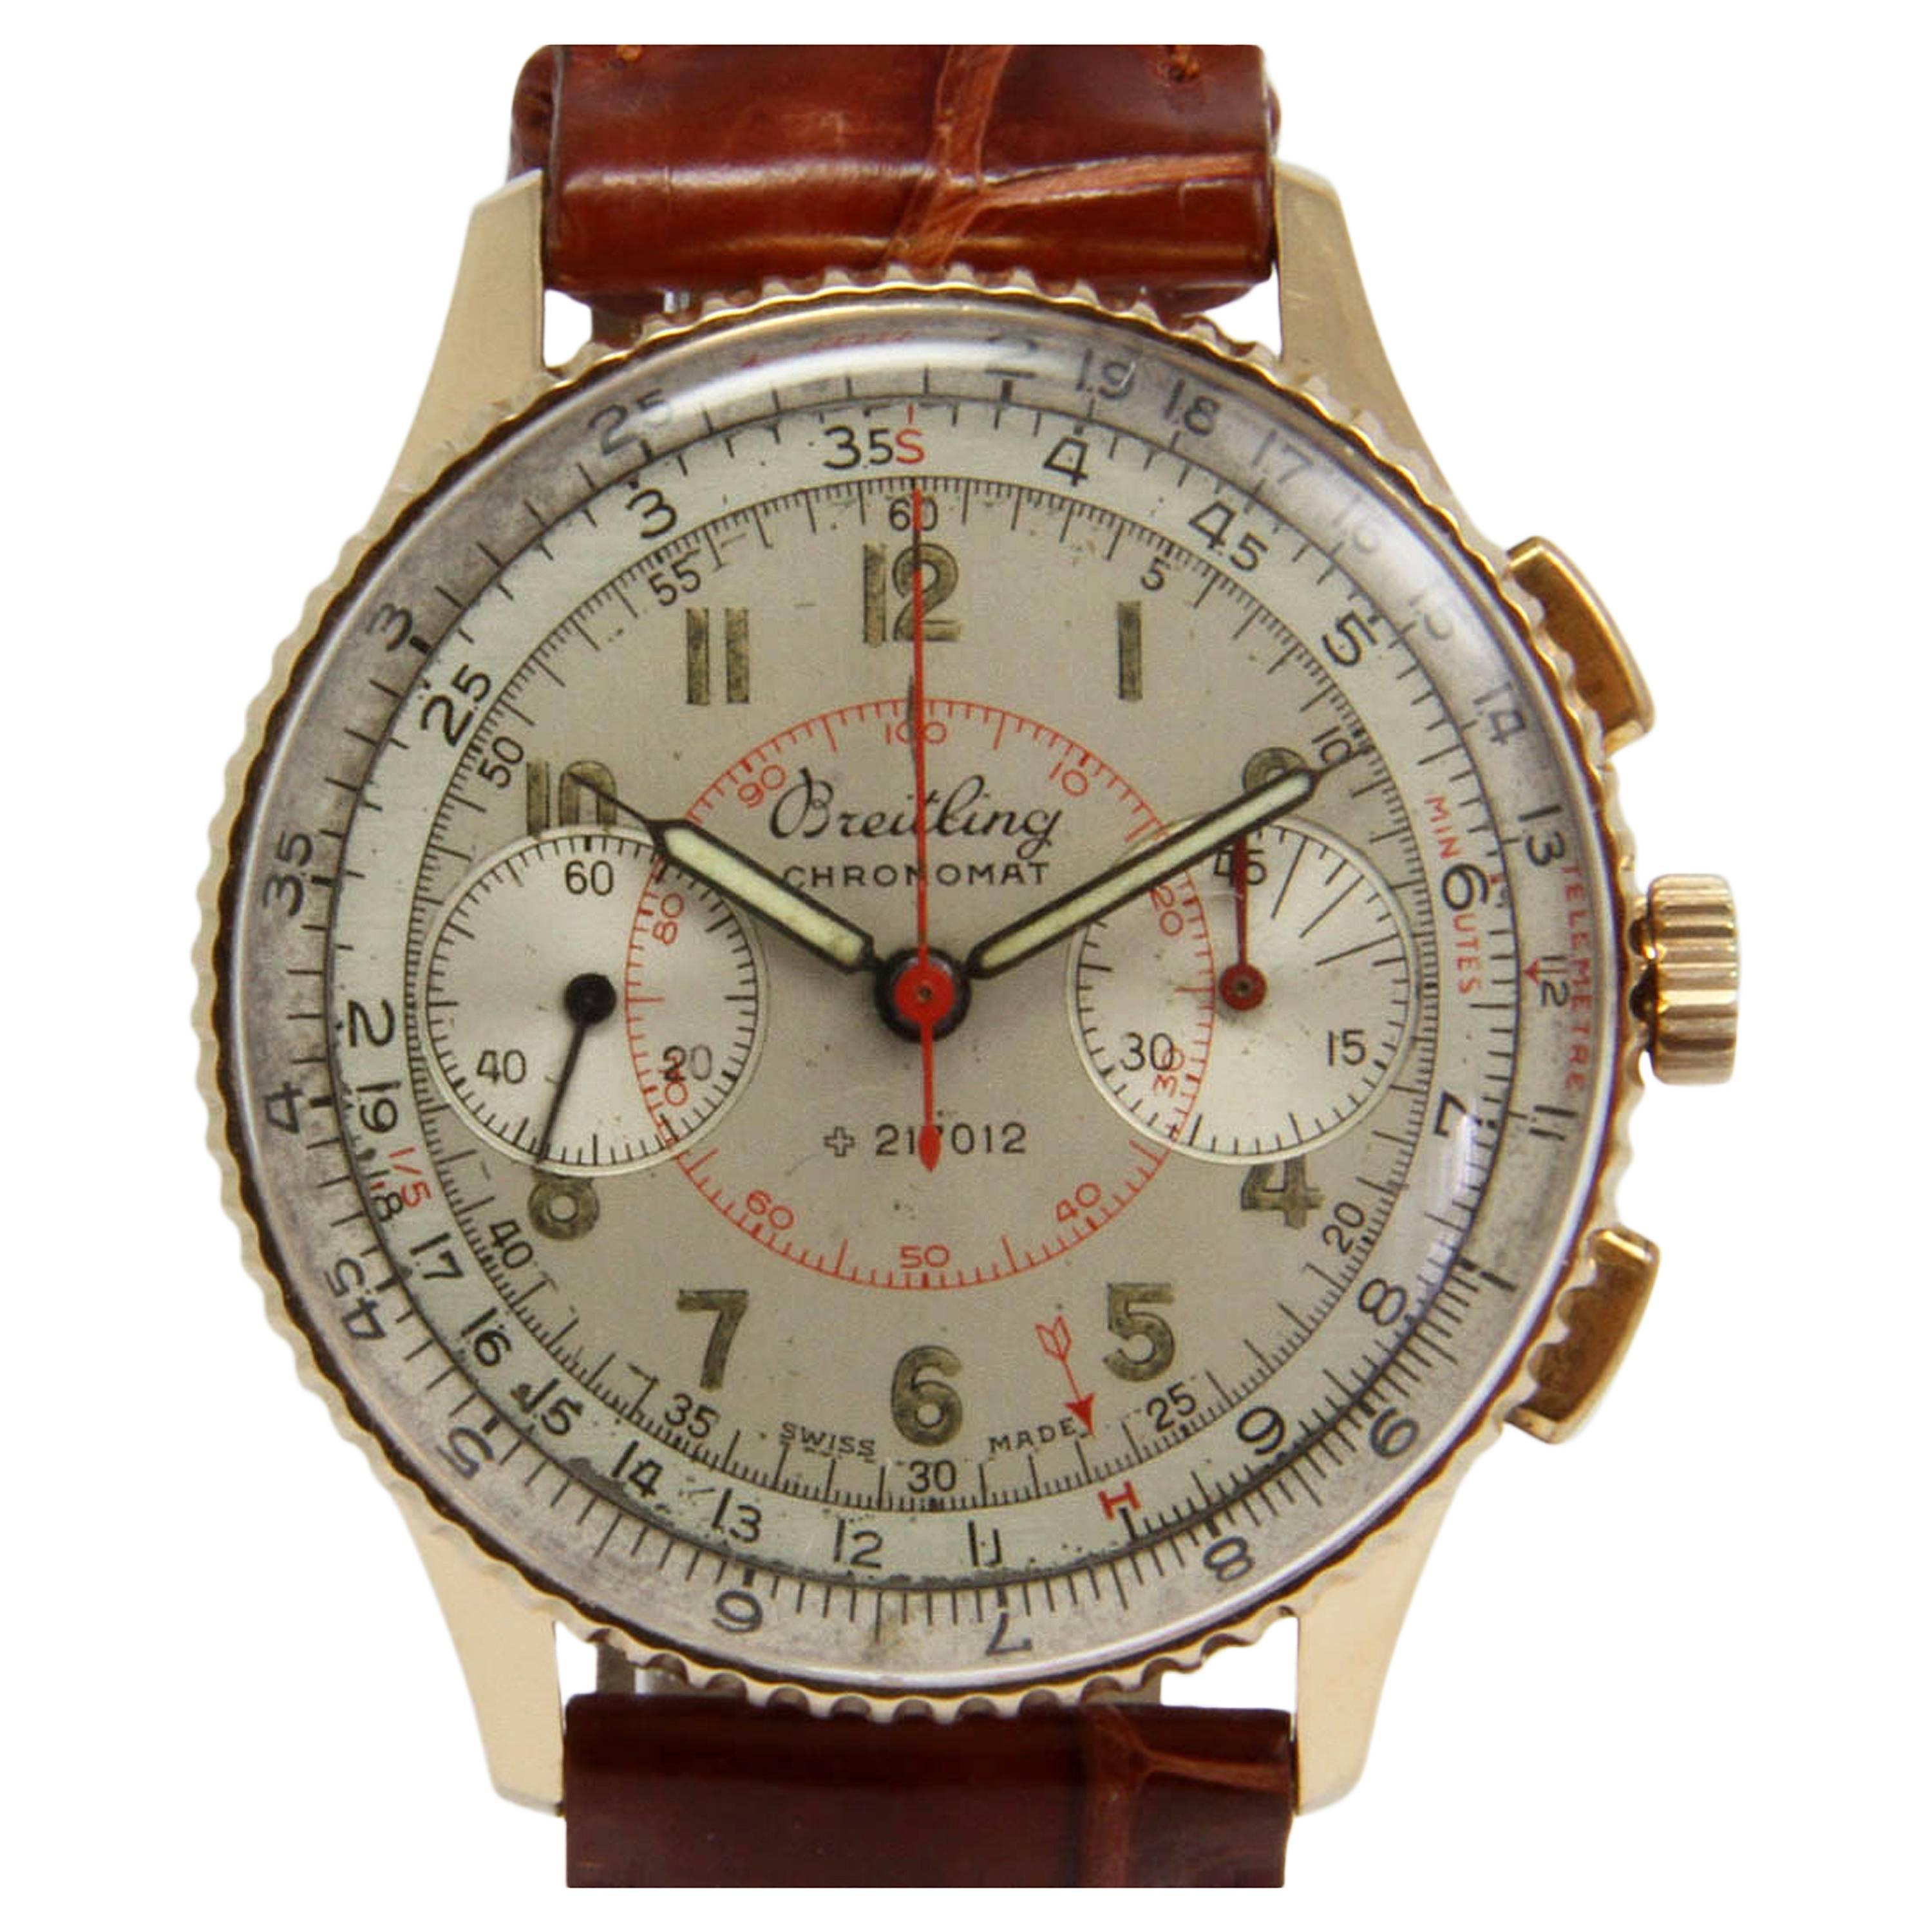 Breitling Rose Gold Chronomat Chronograph Wristwatch Ref 769 